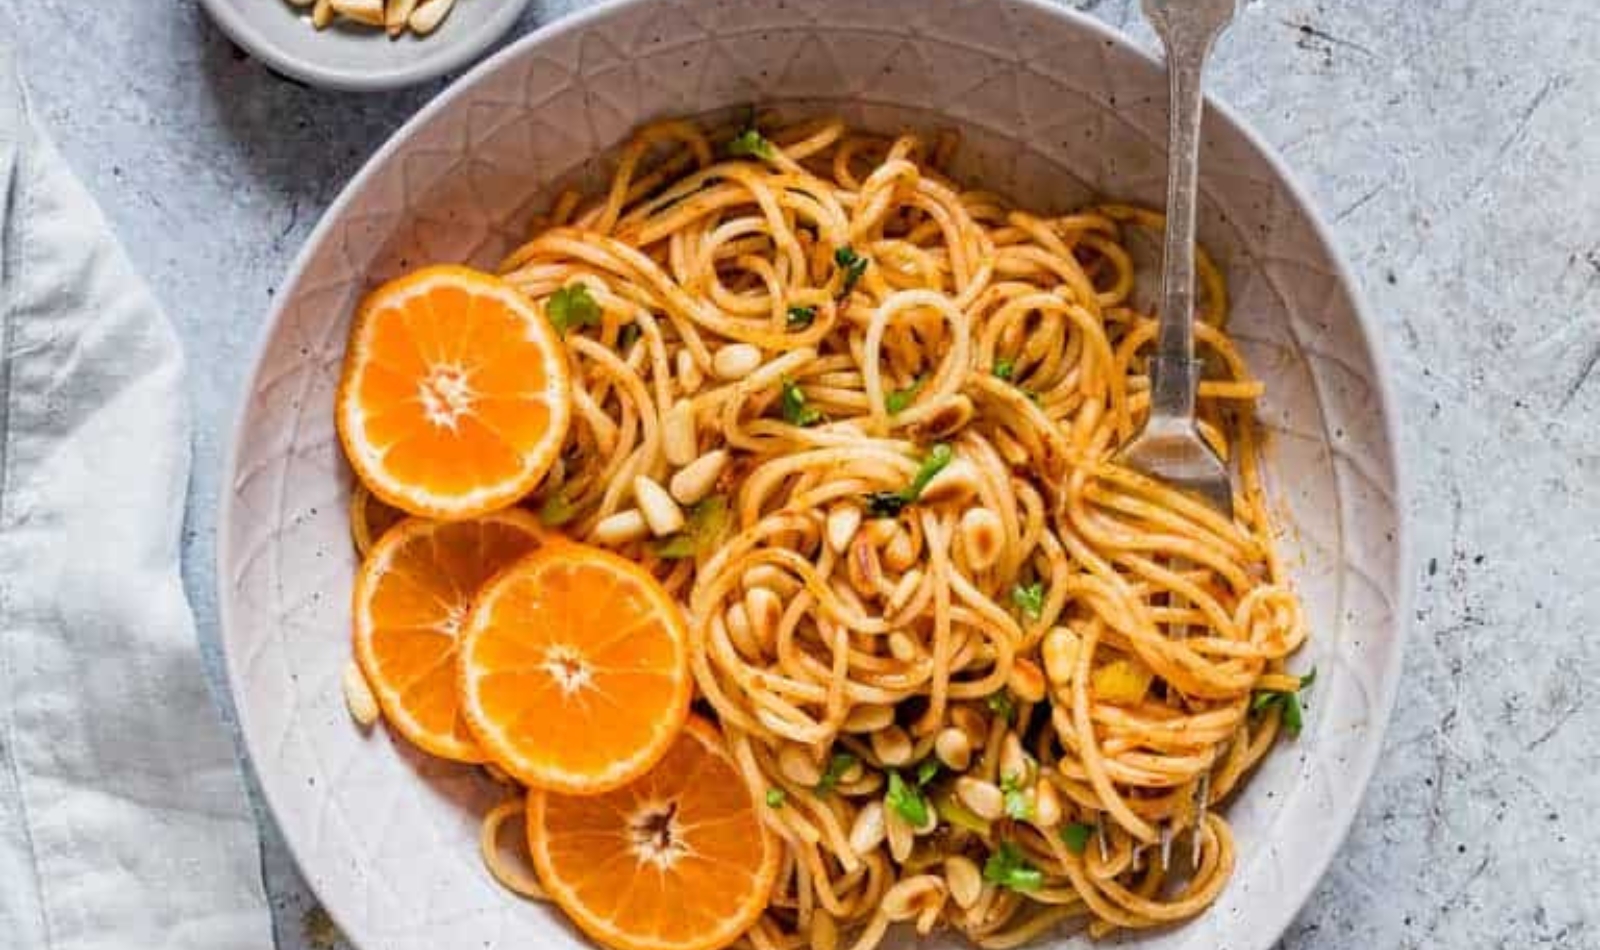 a plate of orange harissa pasta